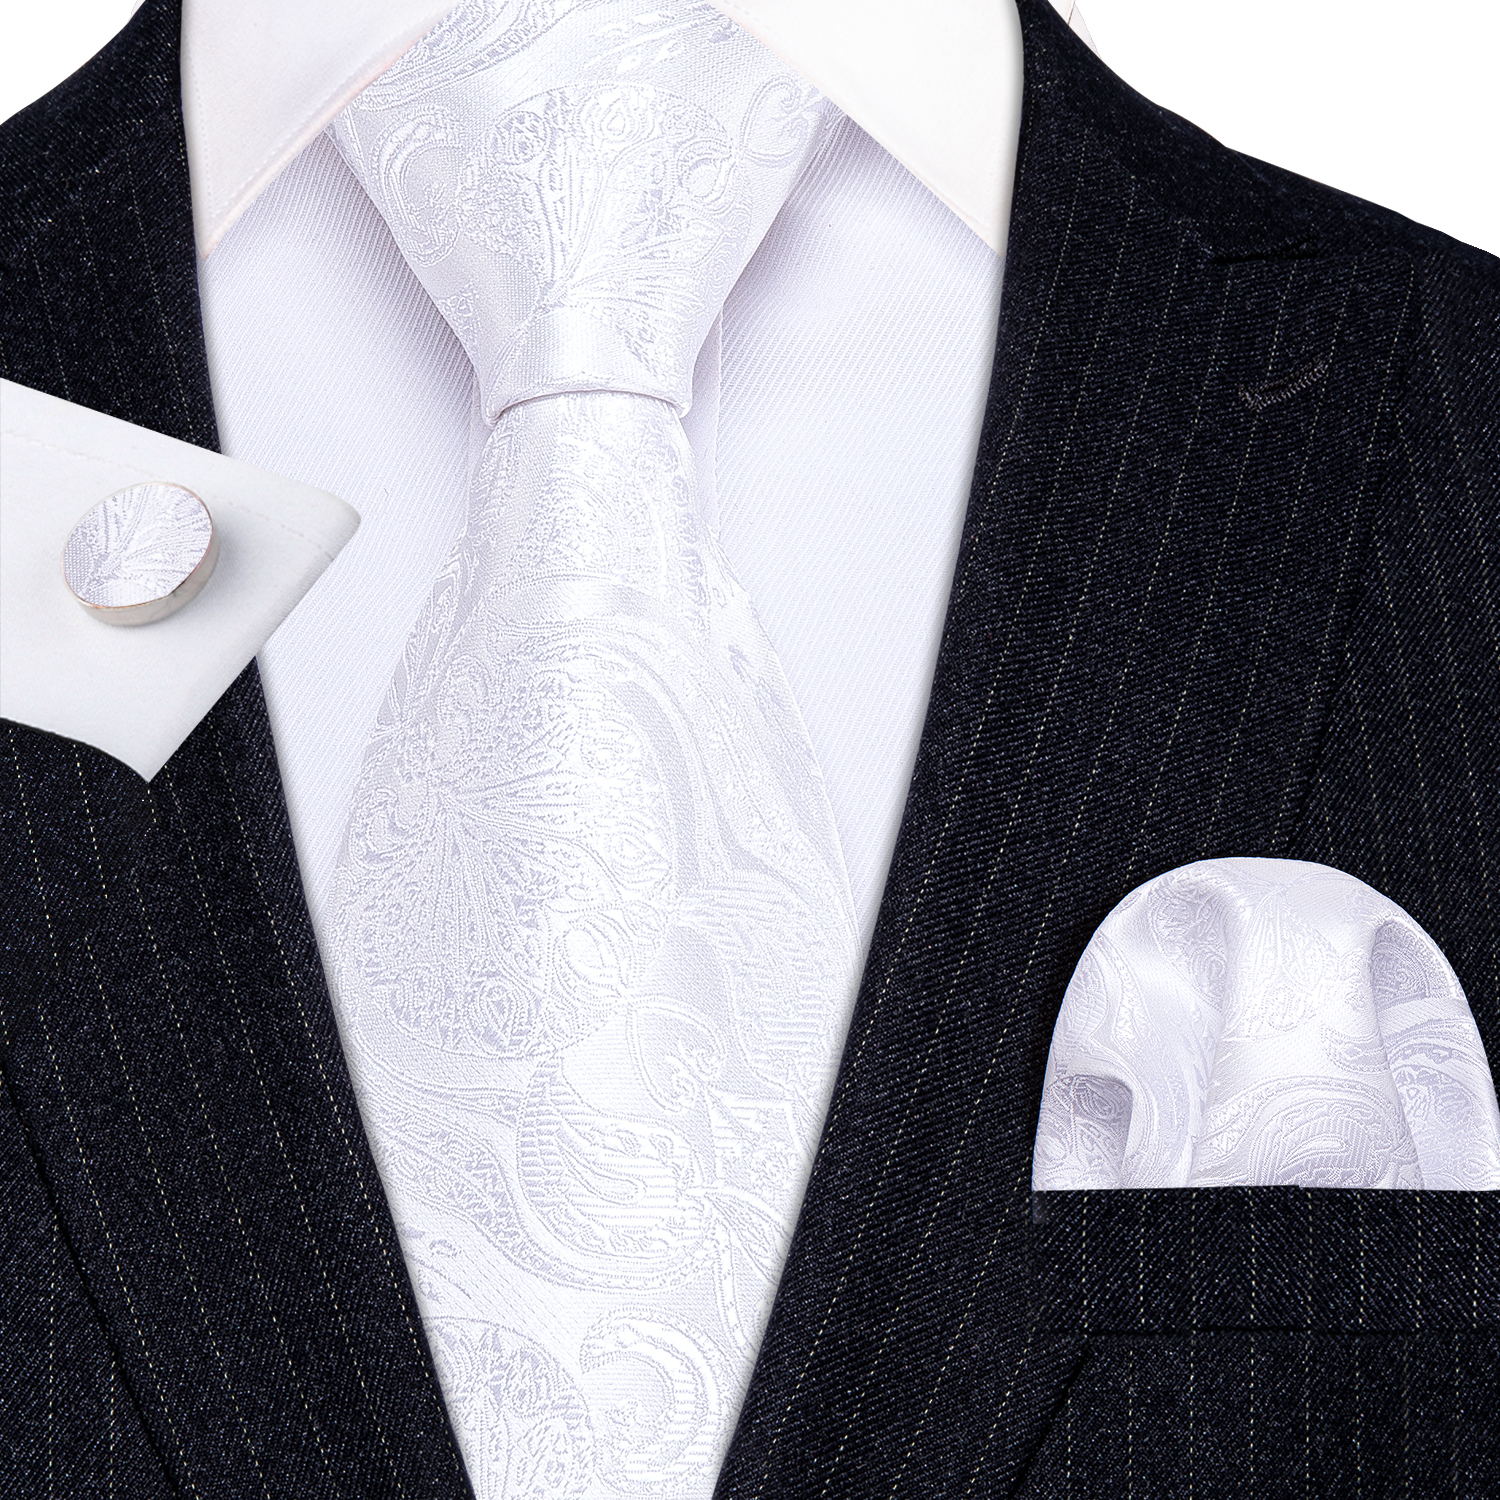 Barry.wang White Tie Paisley Silk Men's Tie Pocket Square Cufflinks Set